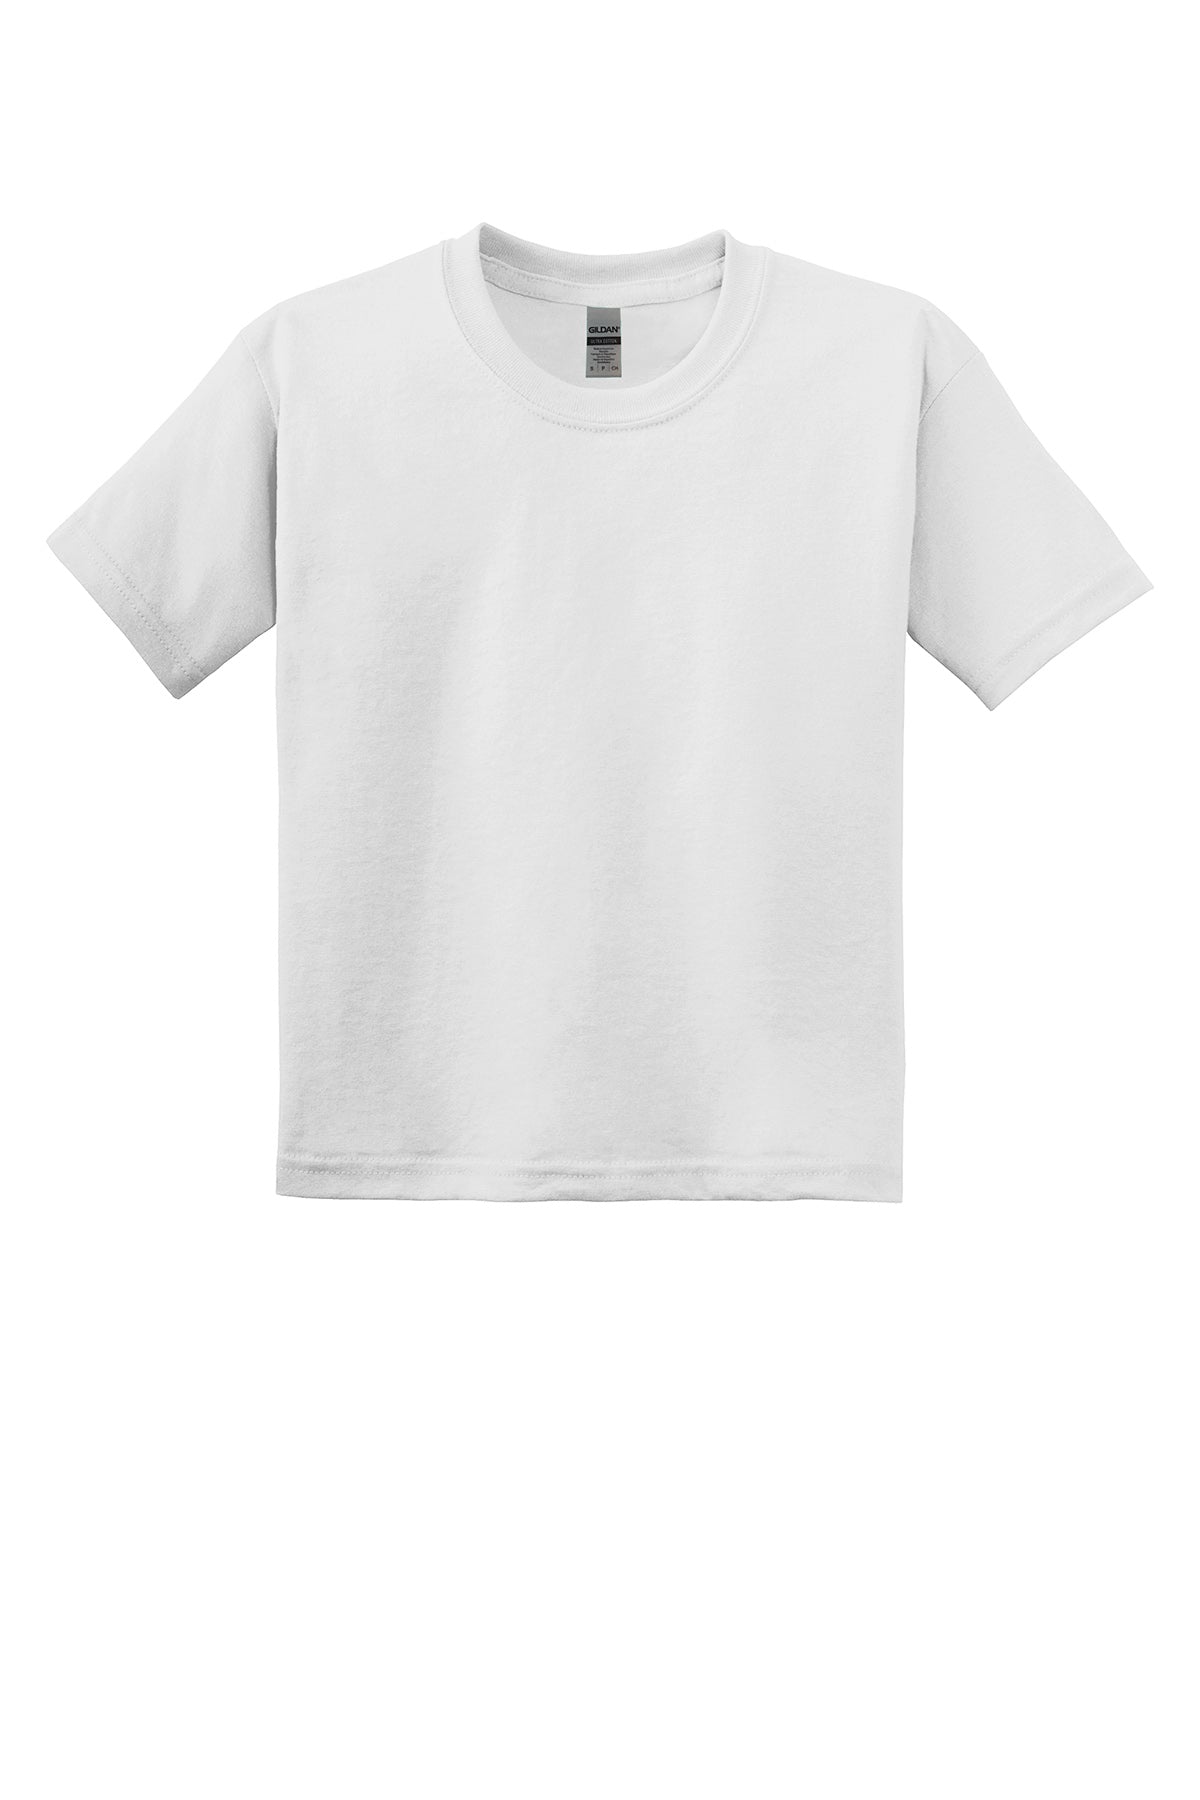 Gildan 8000B Youth Dryblend T-Shirt Yth Small / White